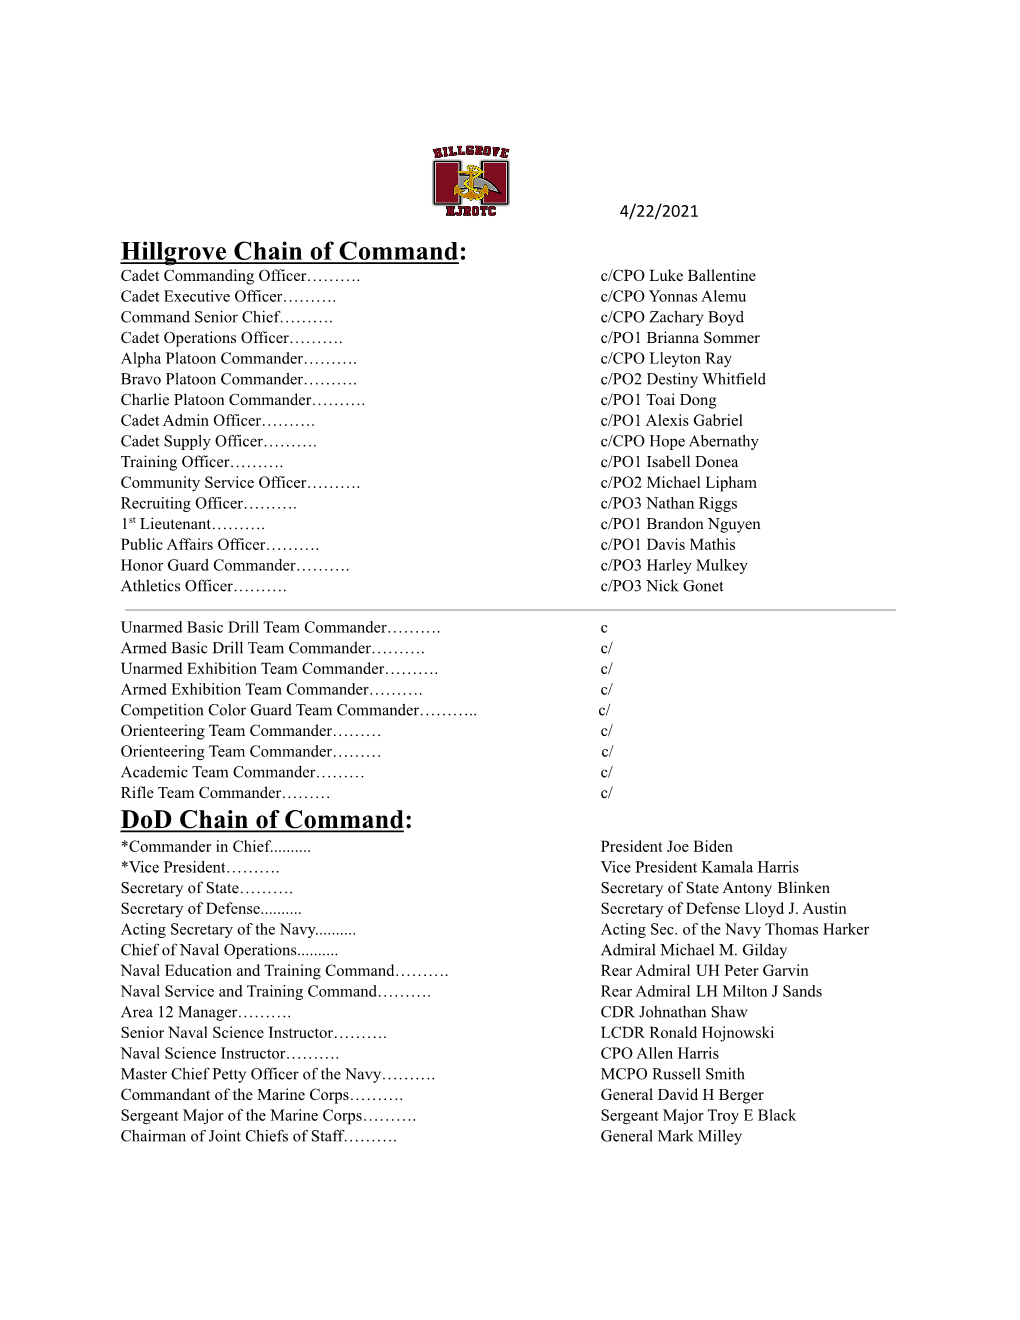 Hillgrove Chain of Command 2020-2021